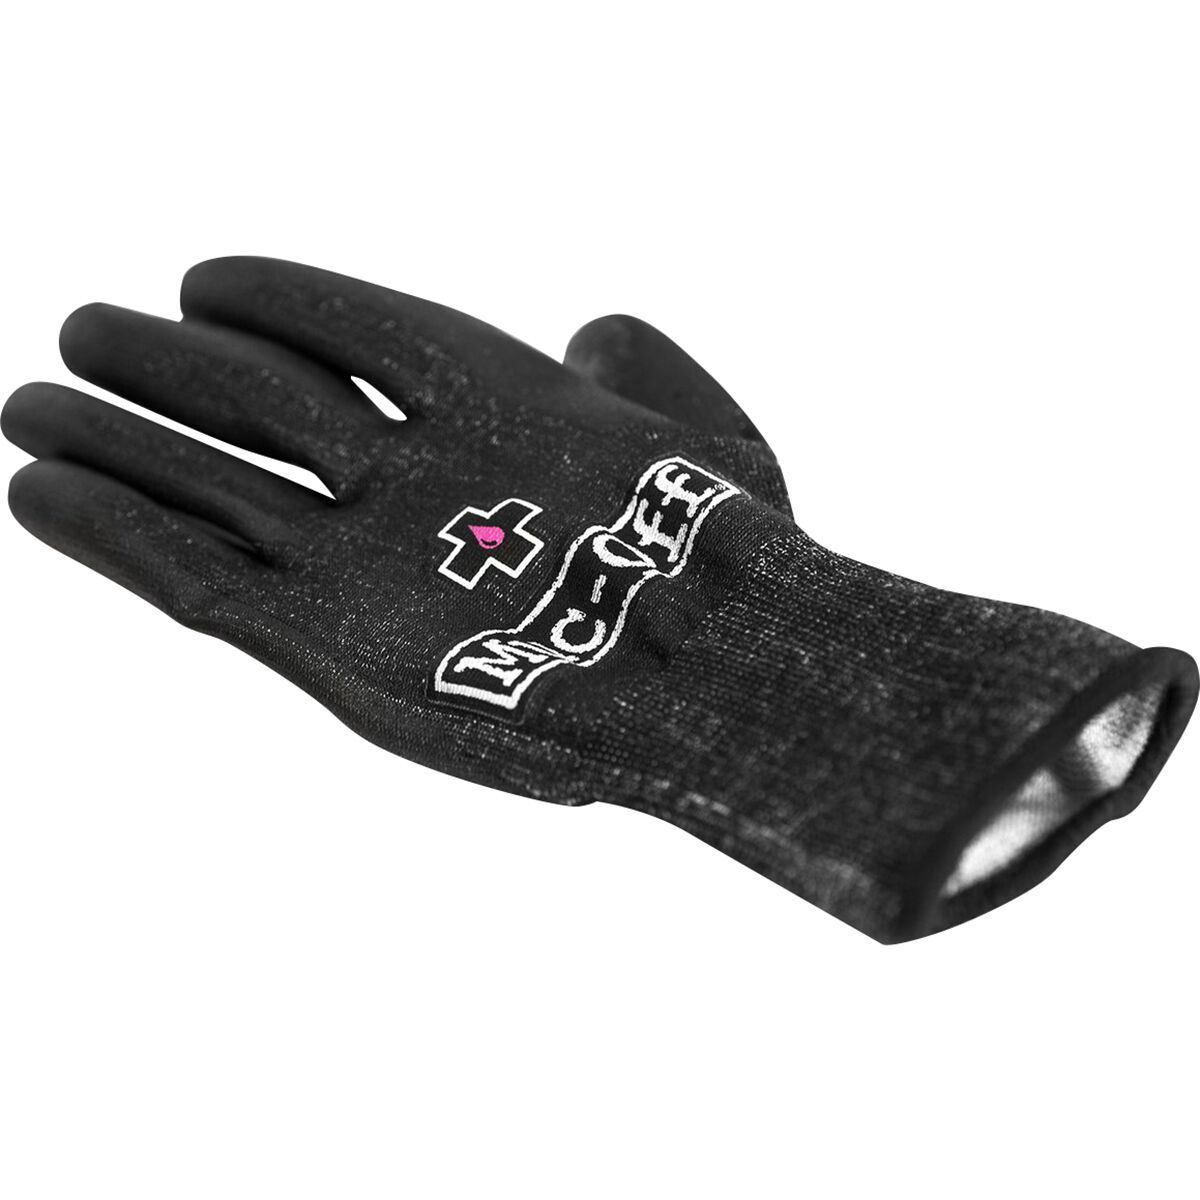 Muc-Off Mechanics Glove Black, XL/10